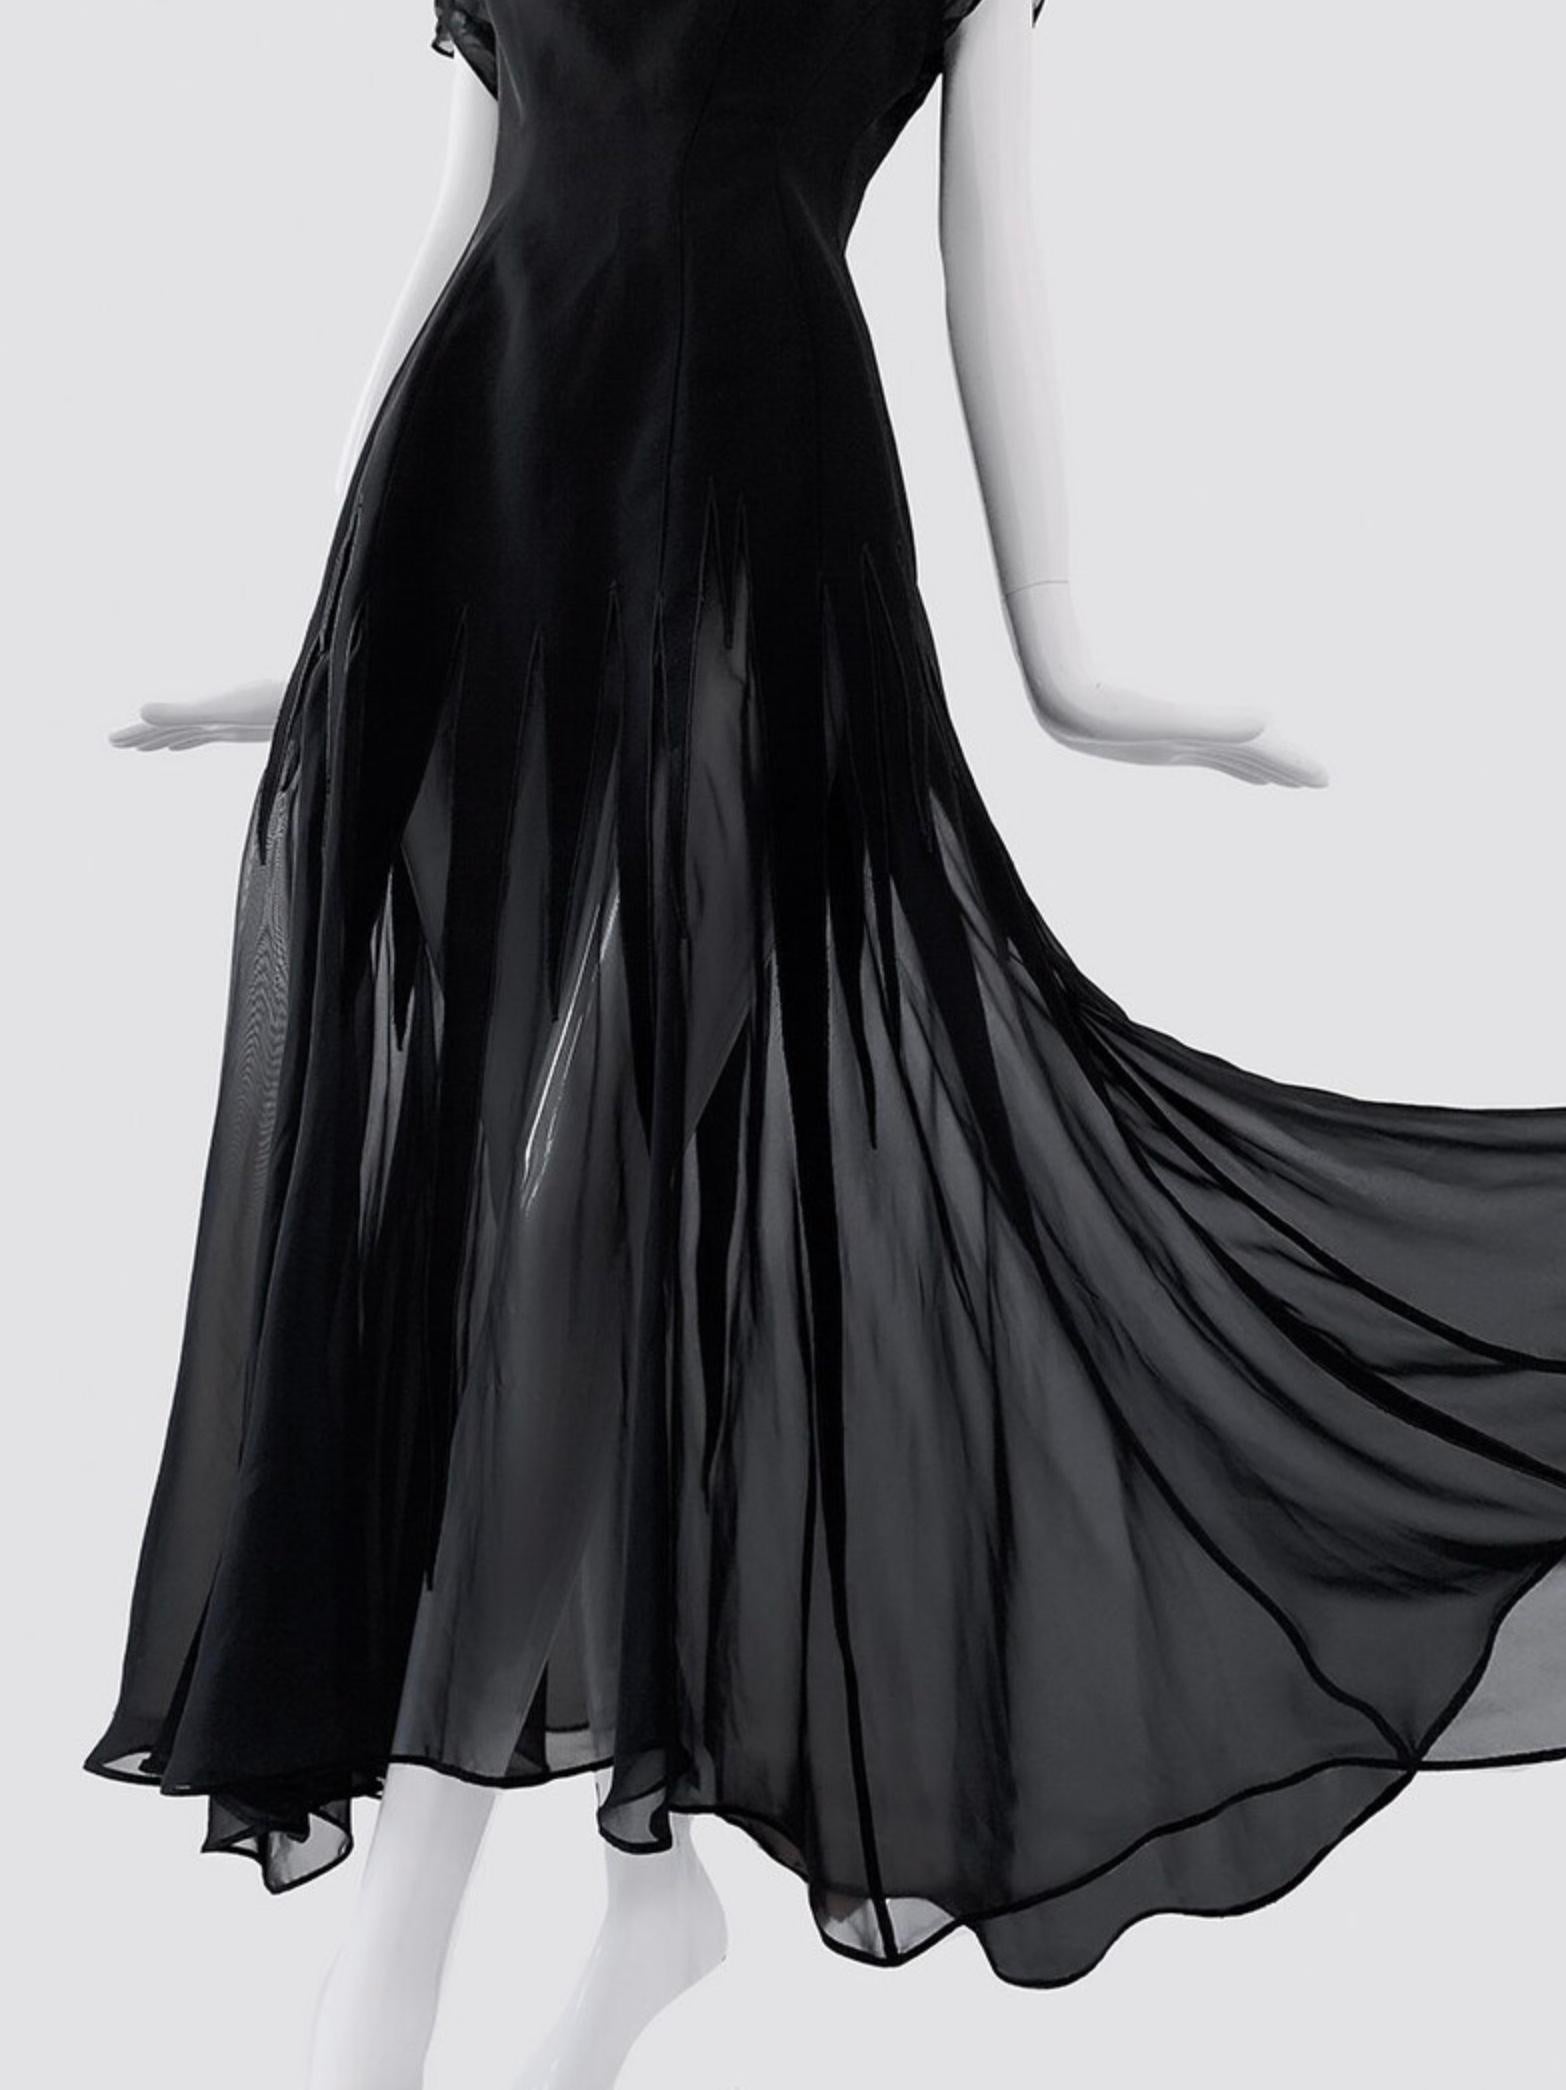 Devine Thierry Mugler Runway Dress Goddess Black Semi Sheer Evening Gown  For Sale 3